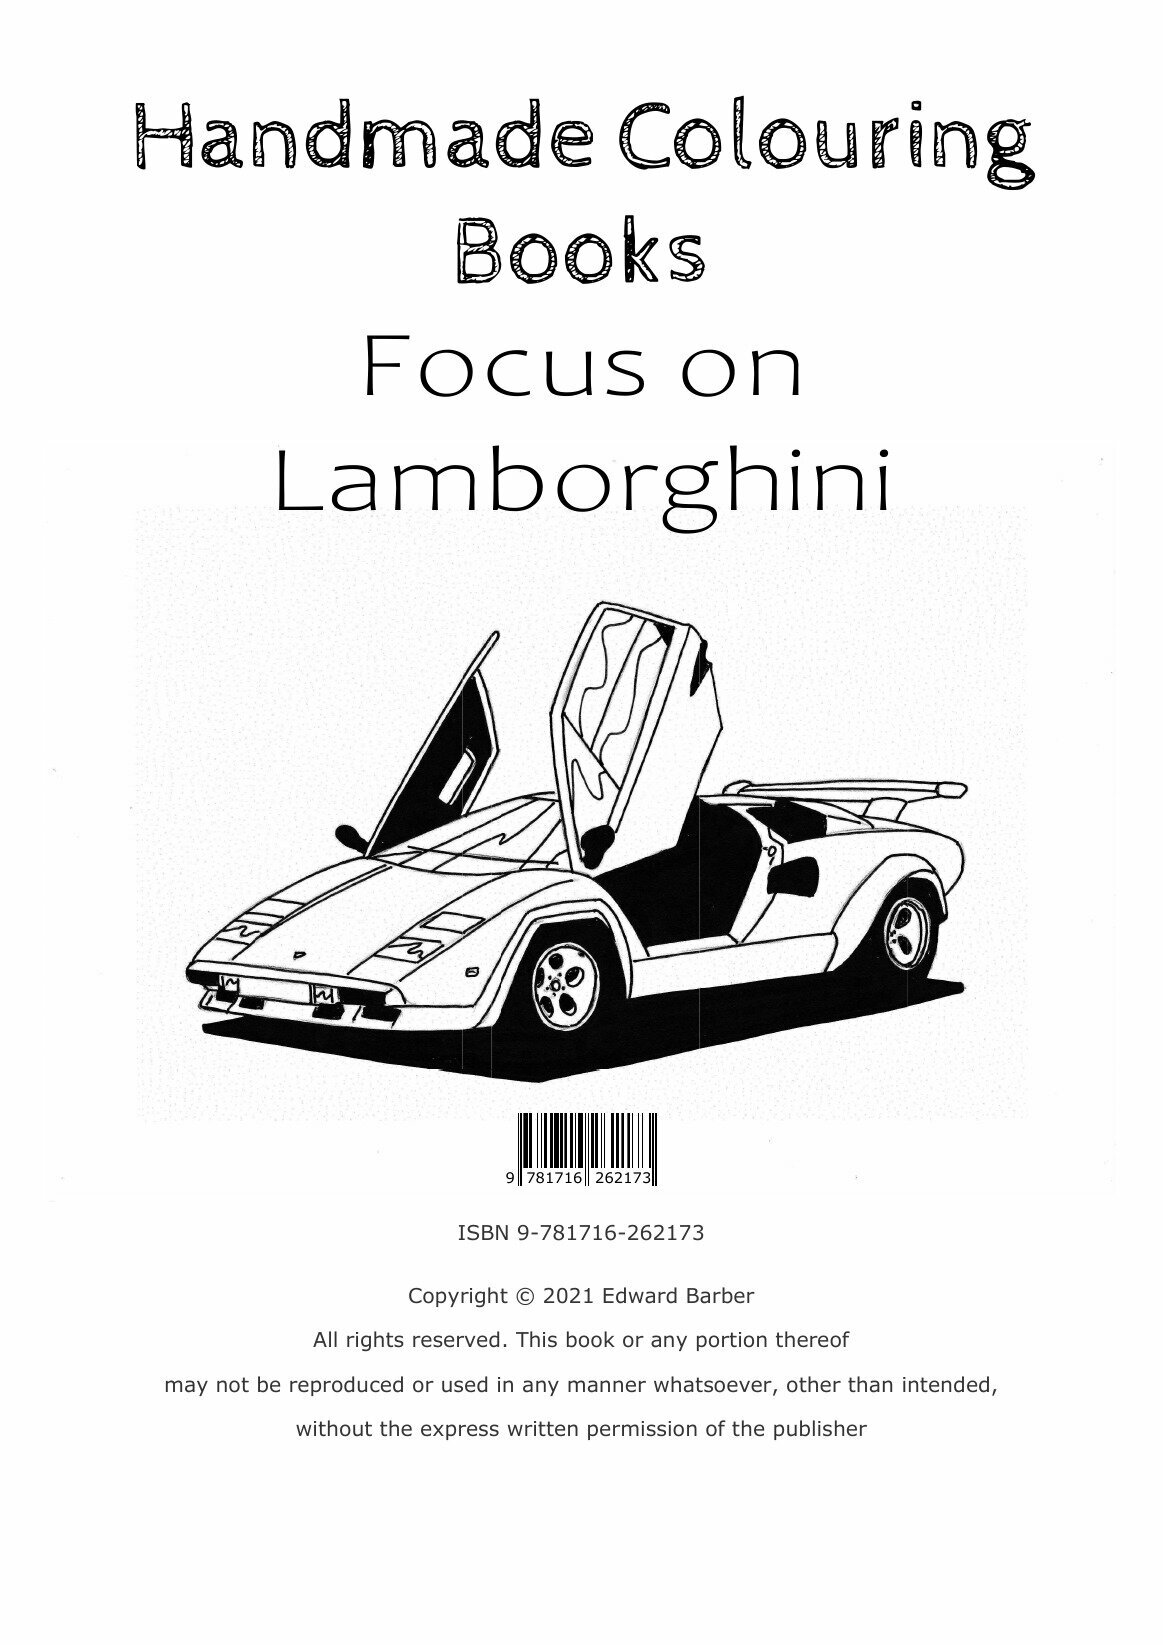 Handmade Colouring Books - Focus on Lamborghini